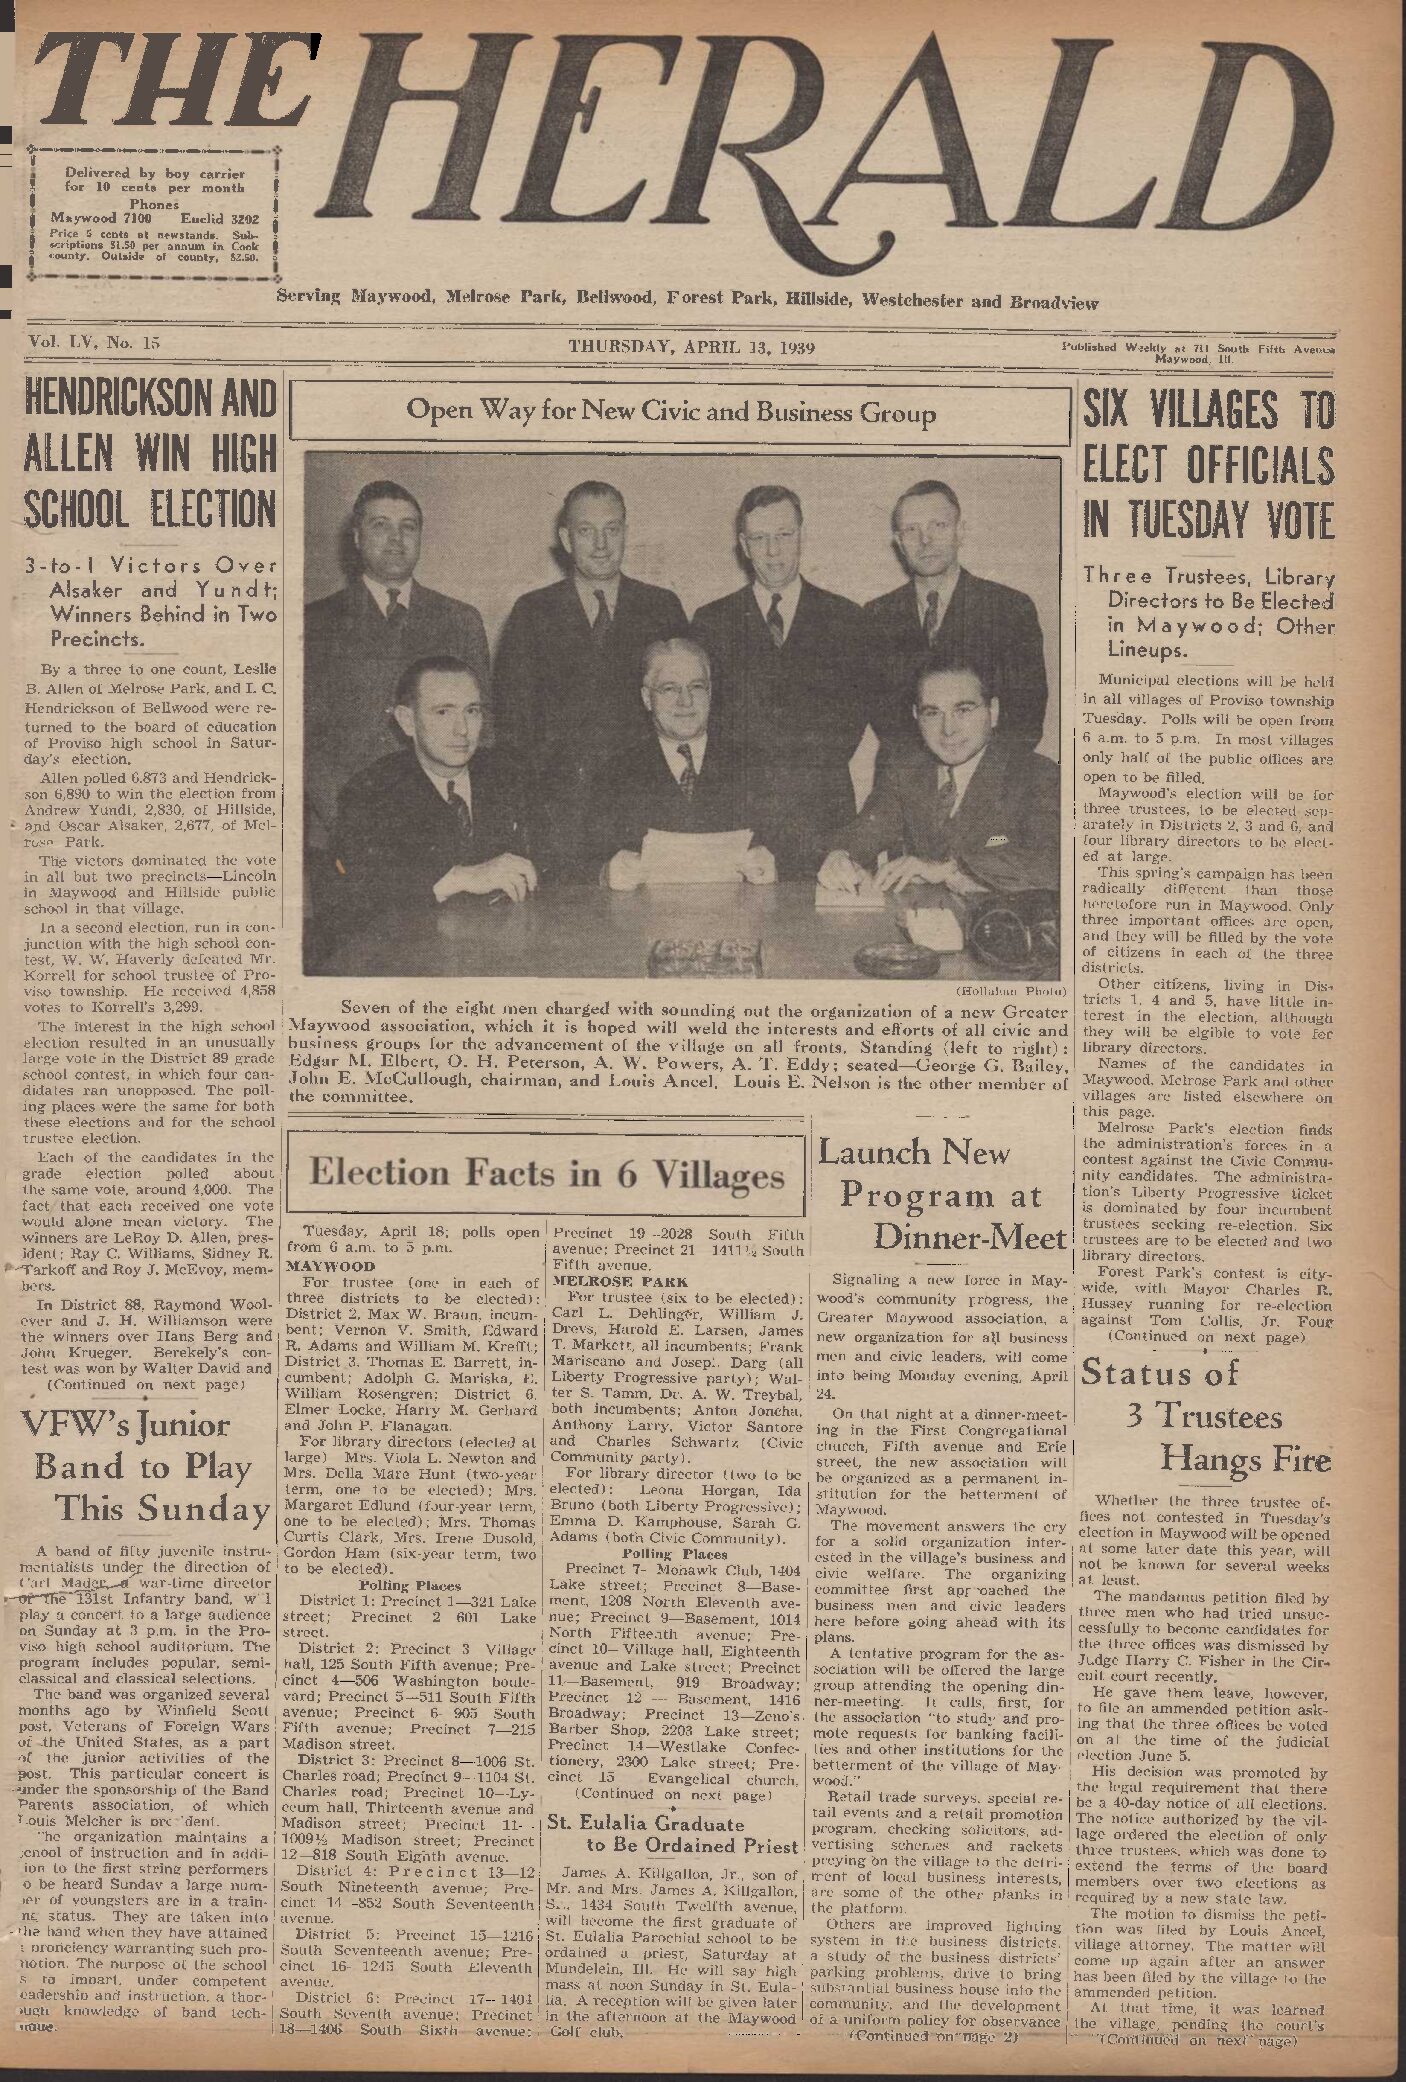 The Herald – 19390413